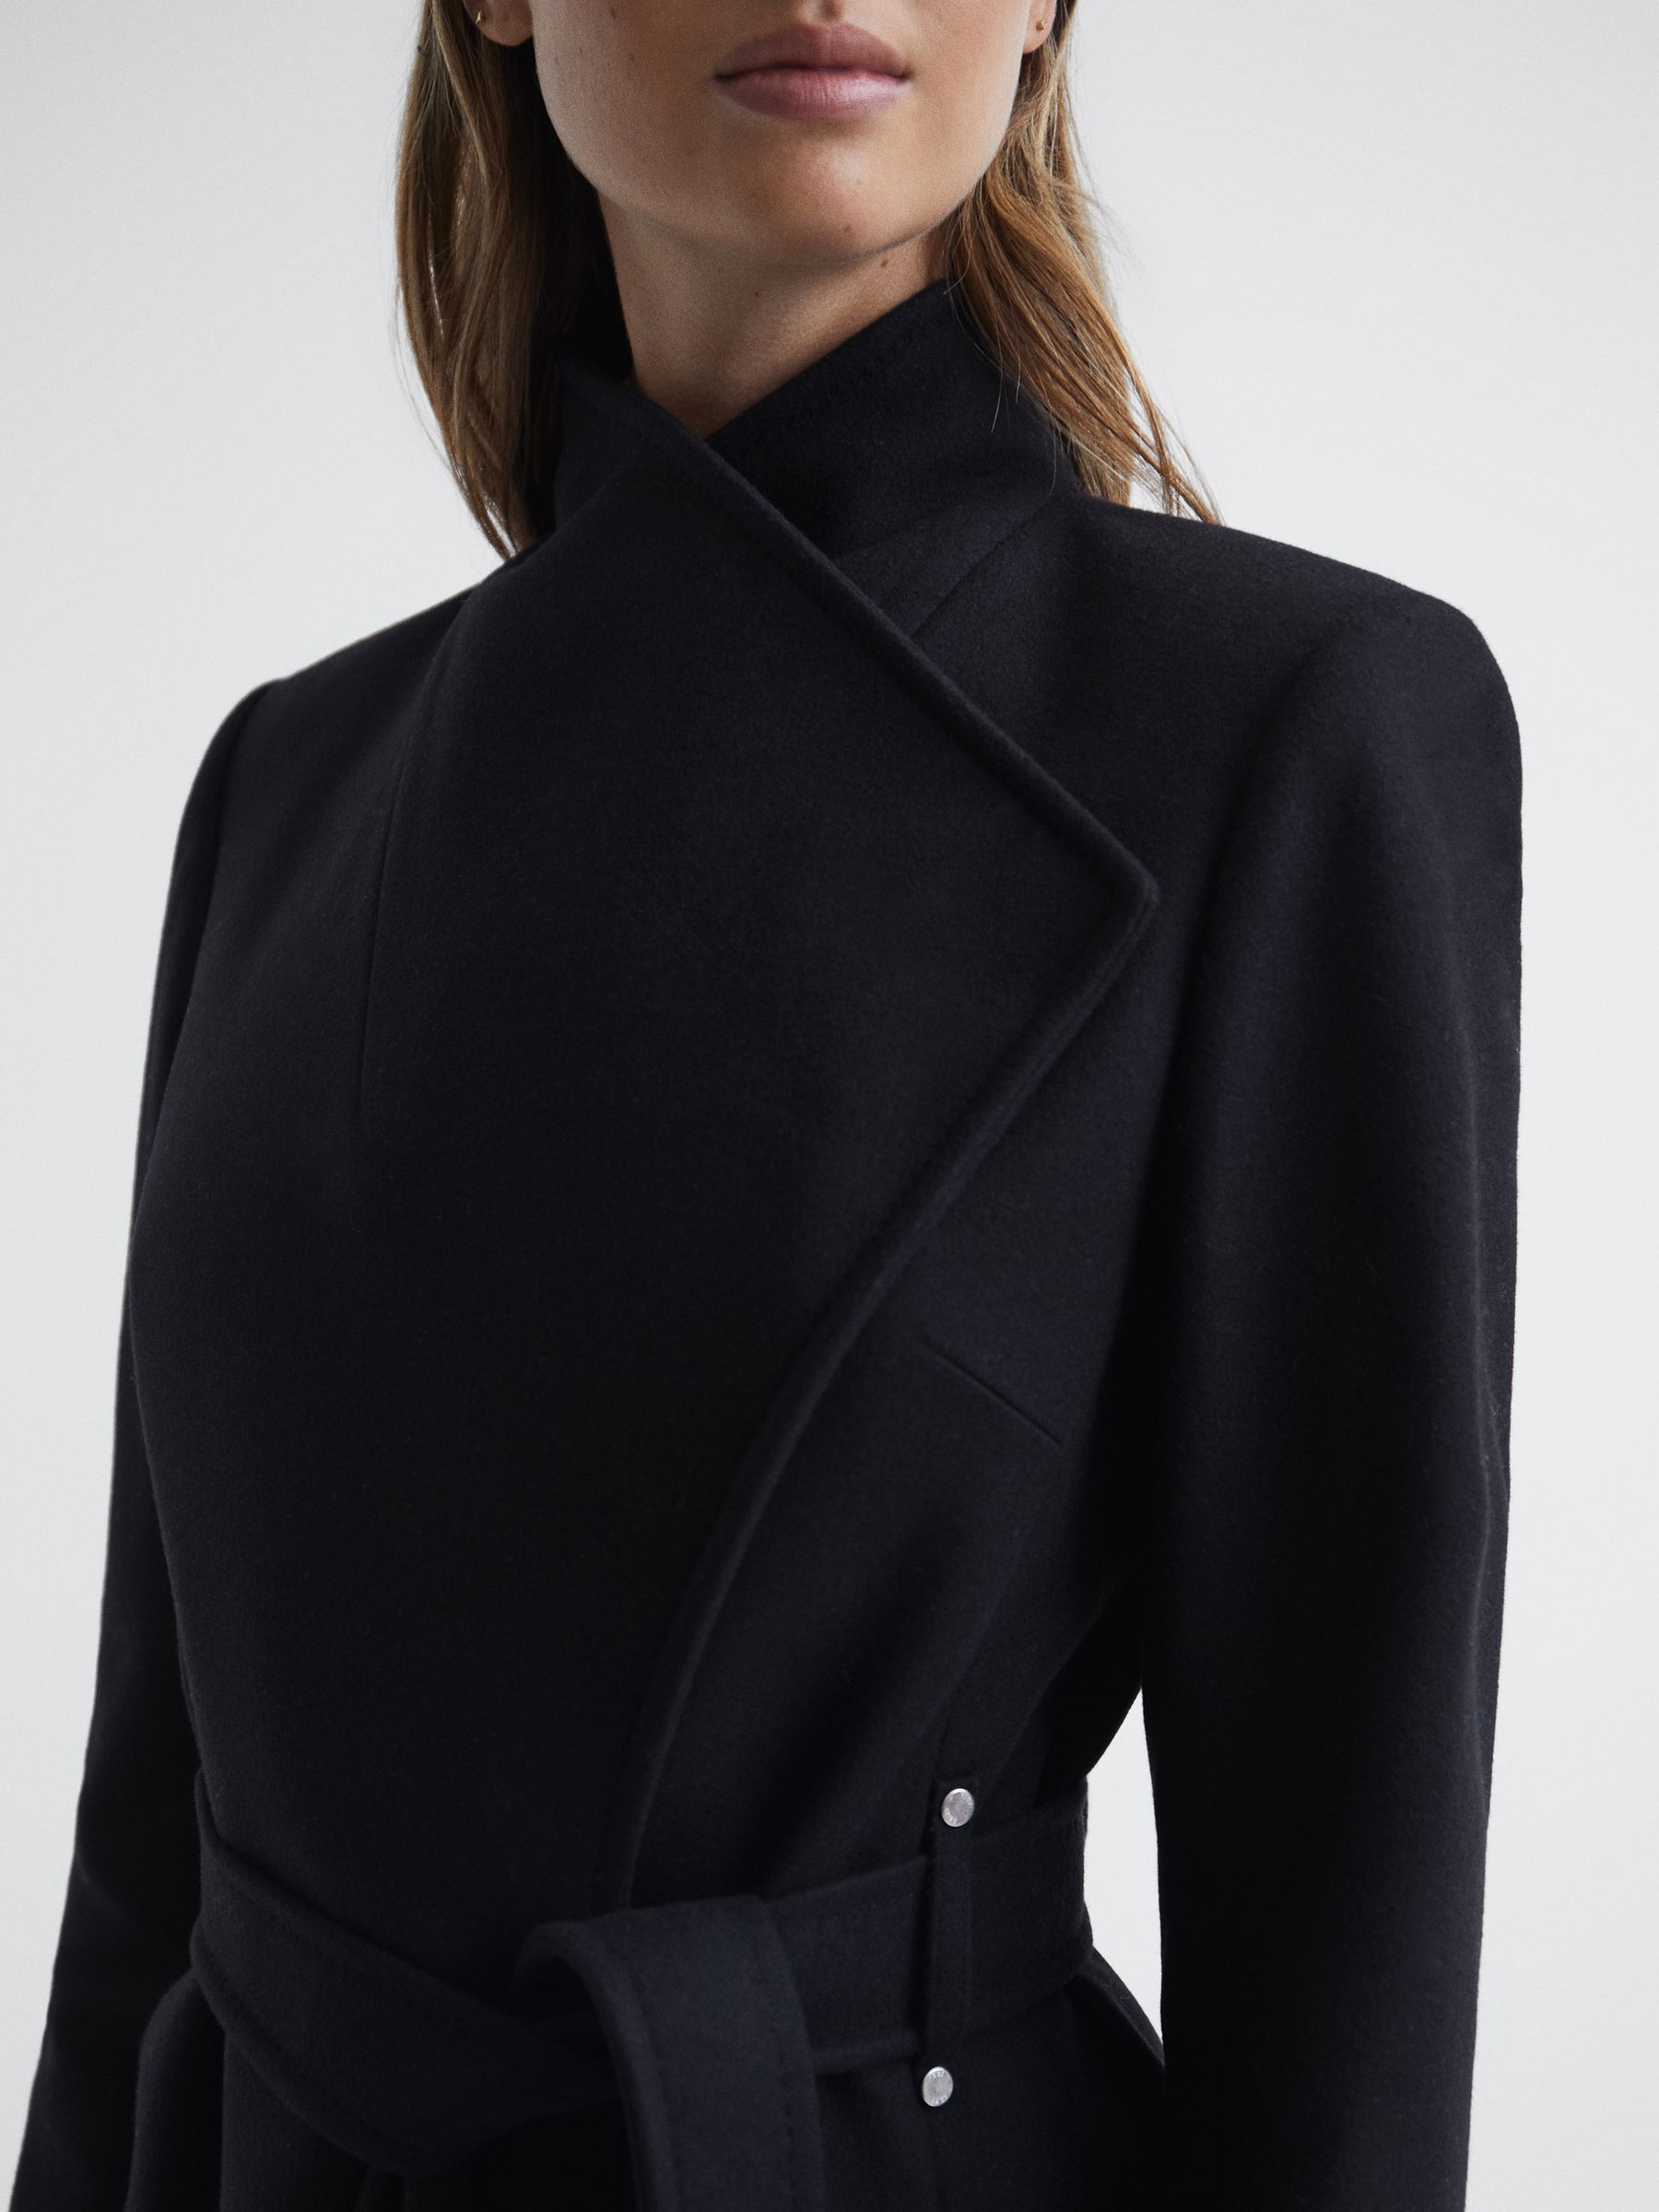 Reiss Belle Cashmere Wool Blend Wrap Collar Belted Coat | REISS USA